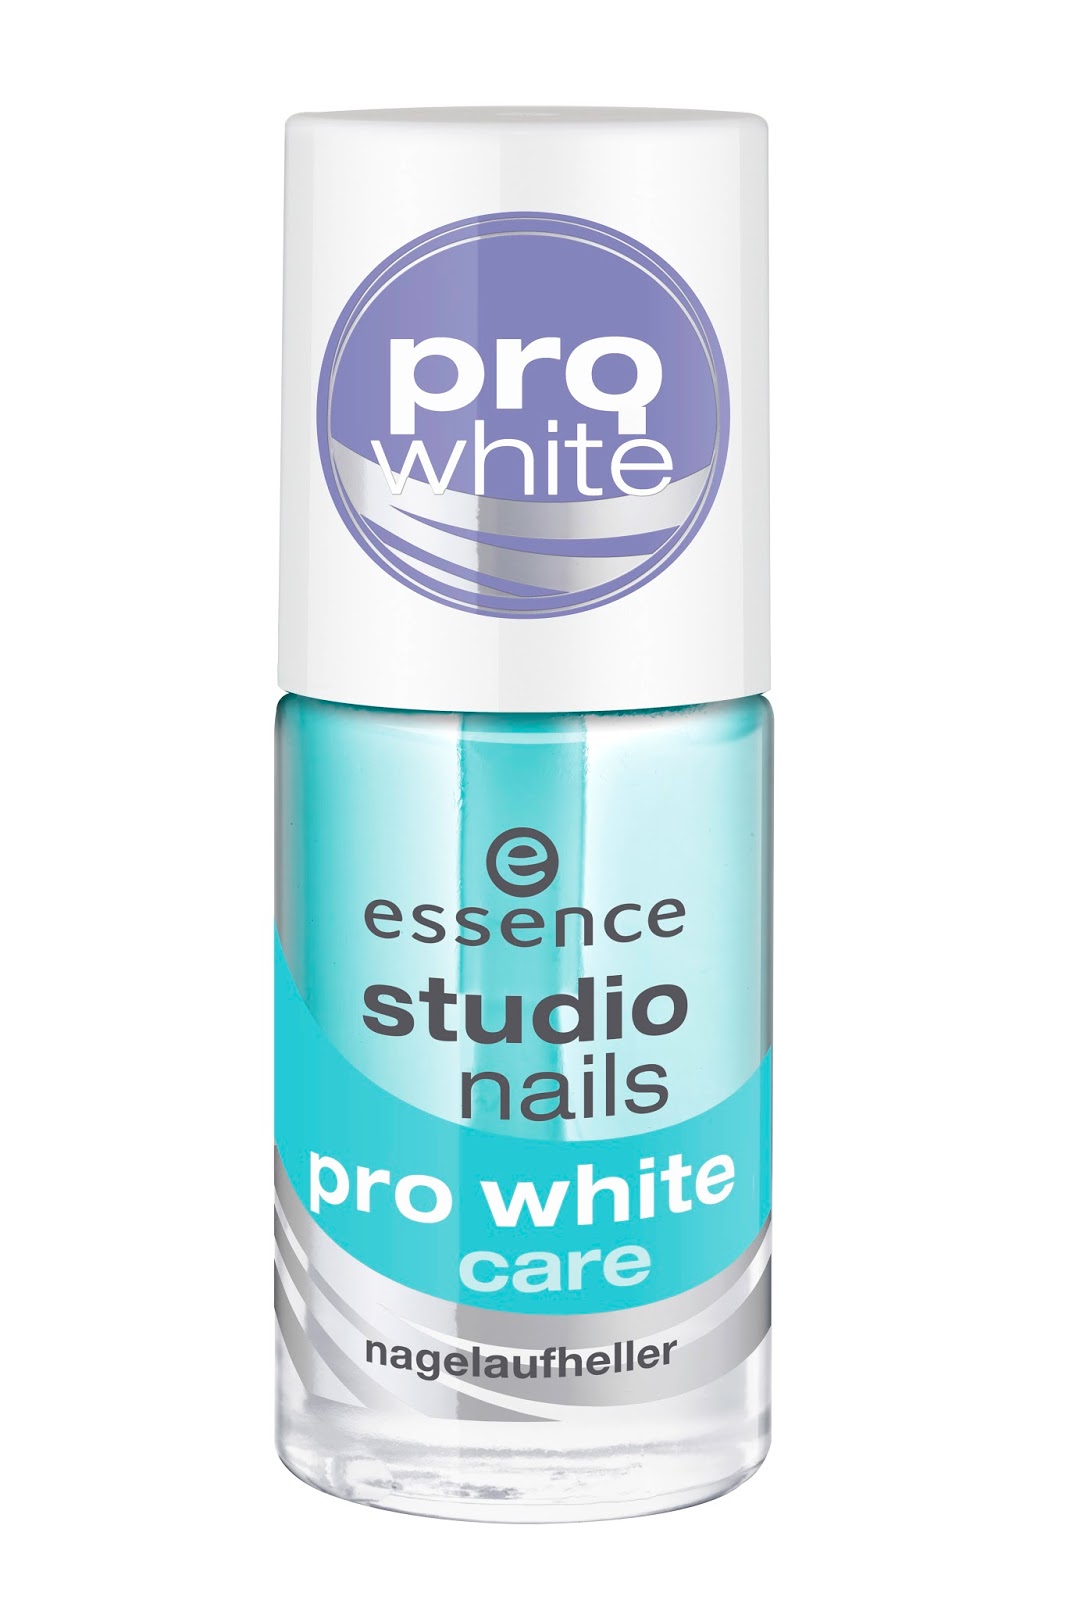 Essence studio nails pro white care